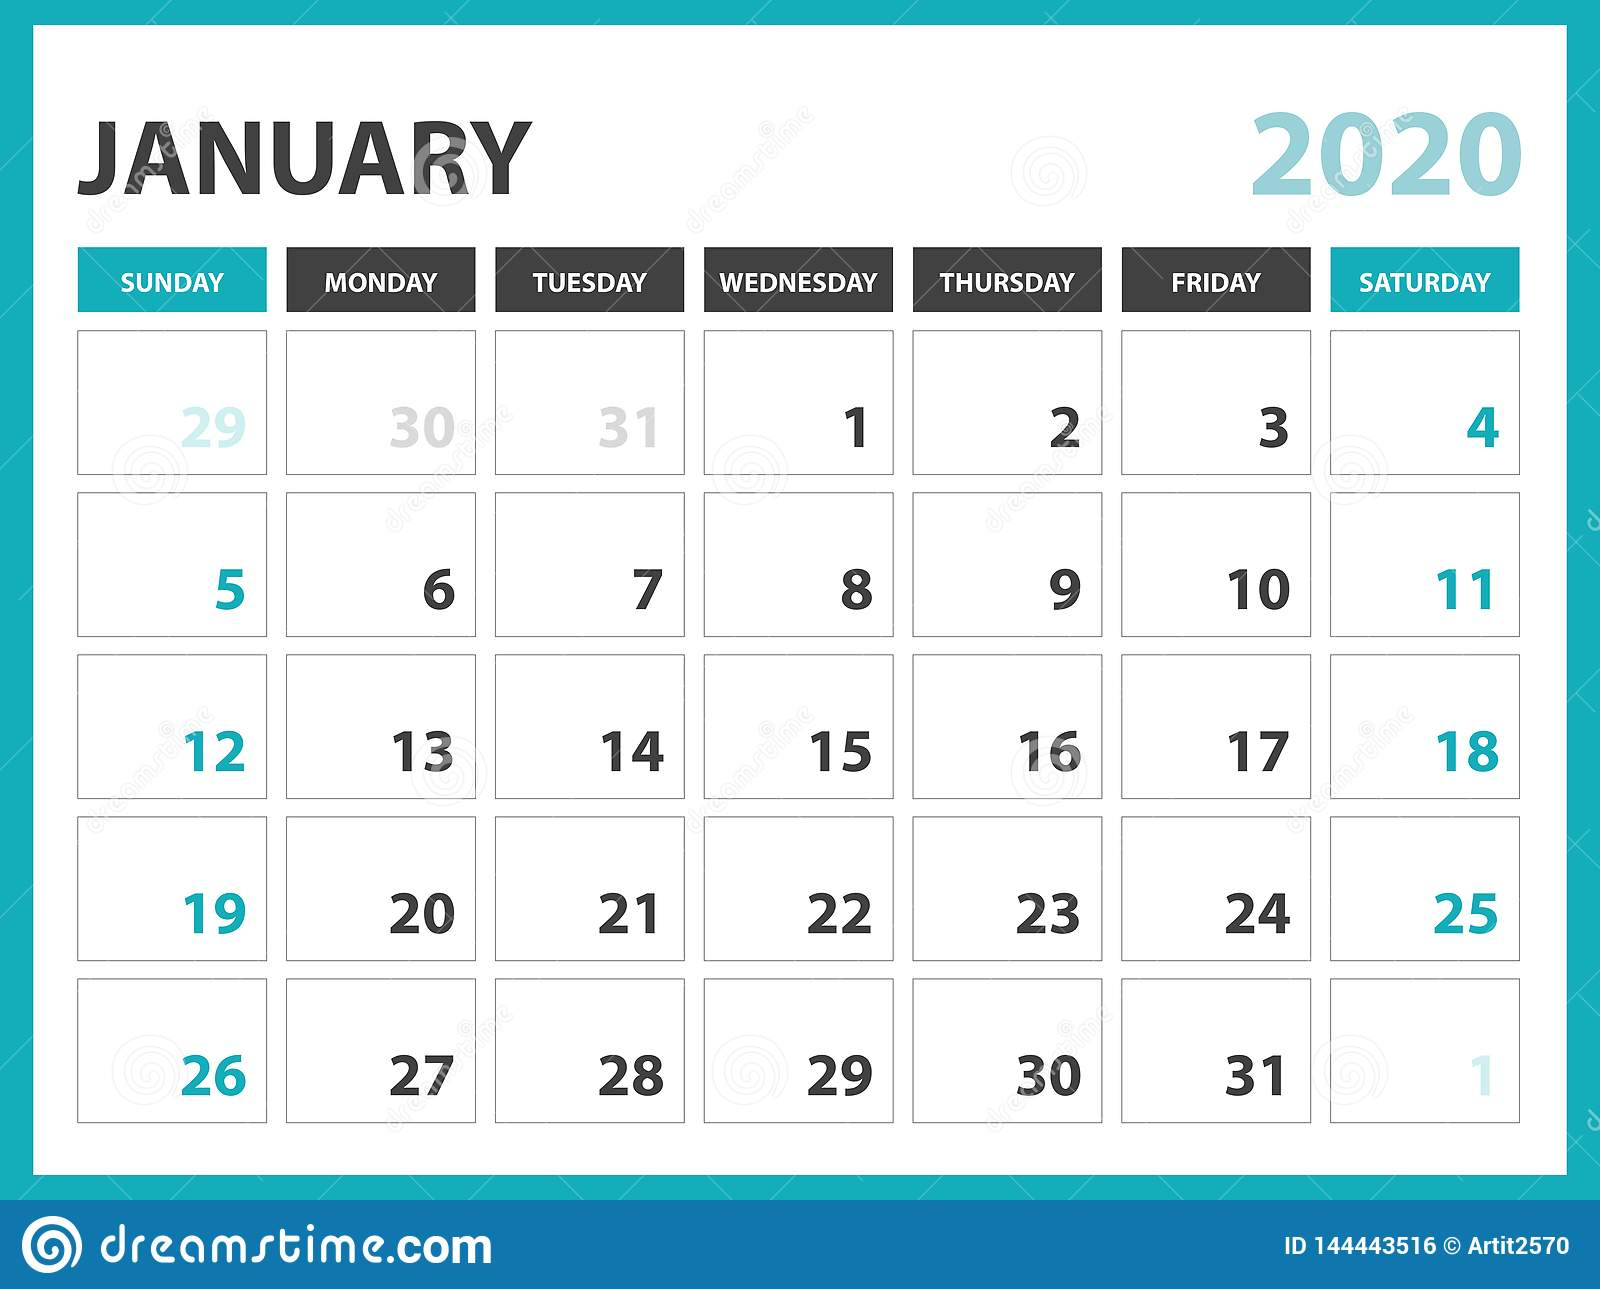 Desk Calendar Layout Size 8 X 6 Inch, January 2020 Calendar for Calander January 2020